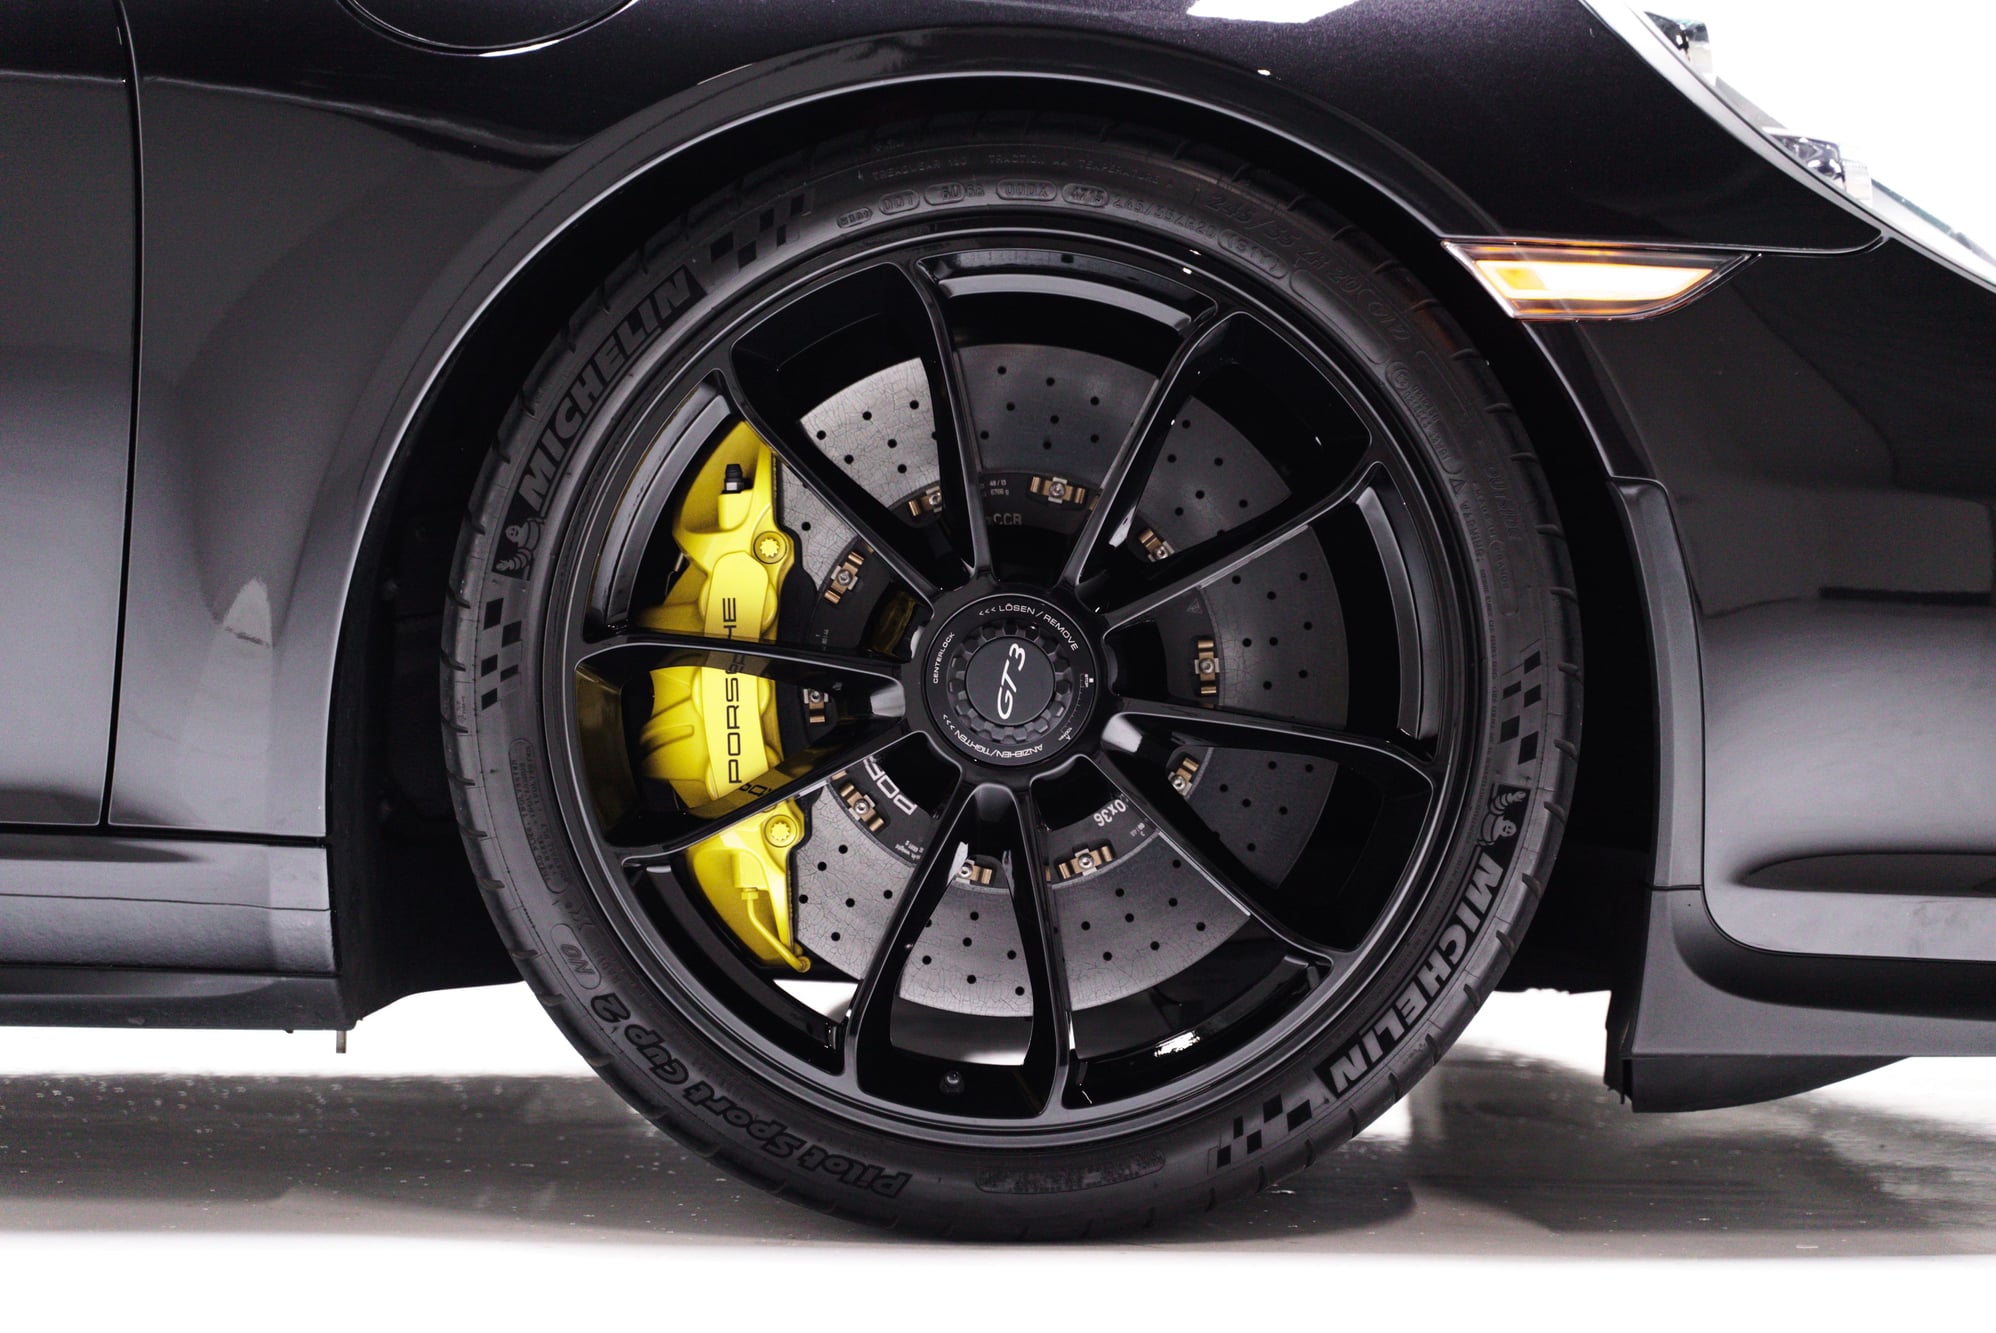 2014 Porsche GT3 - 2014 Porsche 911 GT3 Basalt Black w/ CCBs! - Used - VIN WP0AC2A95ES183301 - 12,251 Miles - 6 cyl - 2WD - Automatic - Coupe - Black - Murrieta, CA 92562, United States